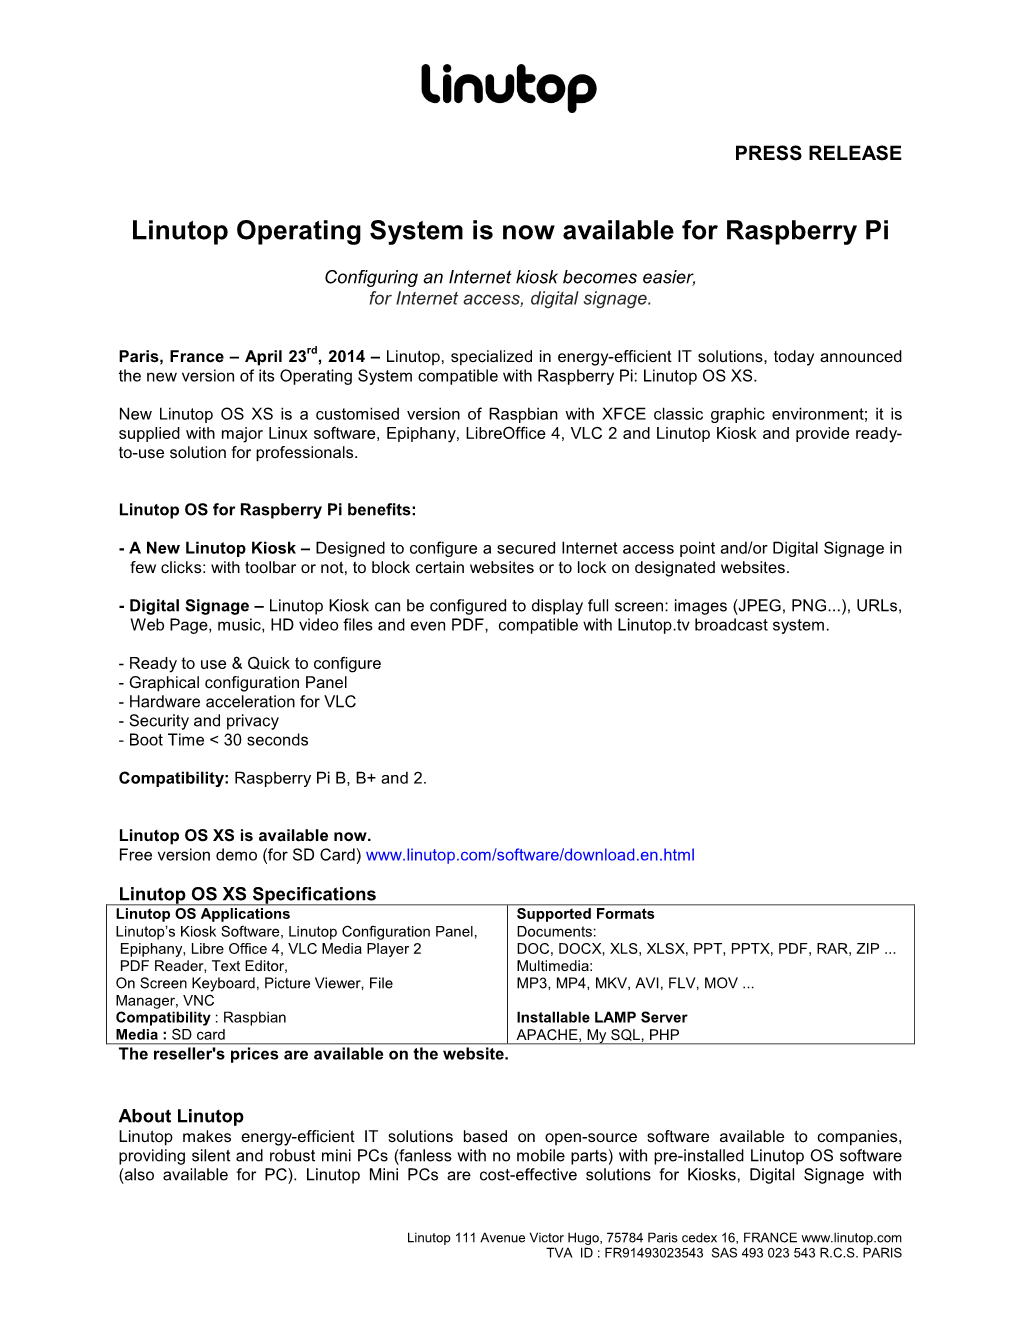 Press Release Linutop OS XS Endraftb